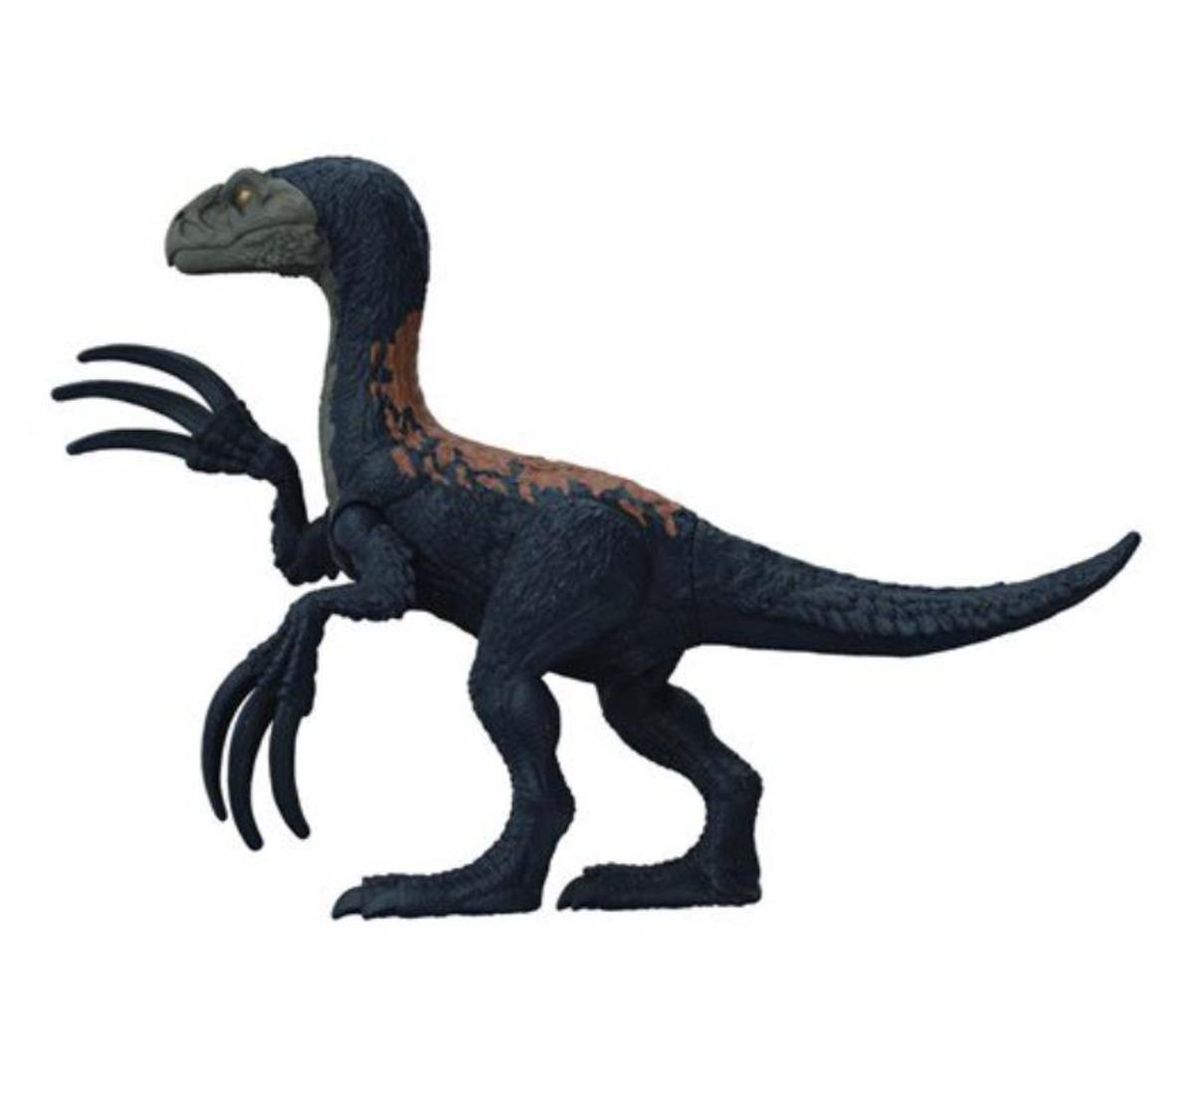 Jurassic World 6' Dinozor Figürü GWT49-GWT51 | Toysall